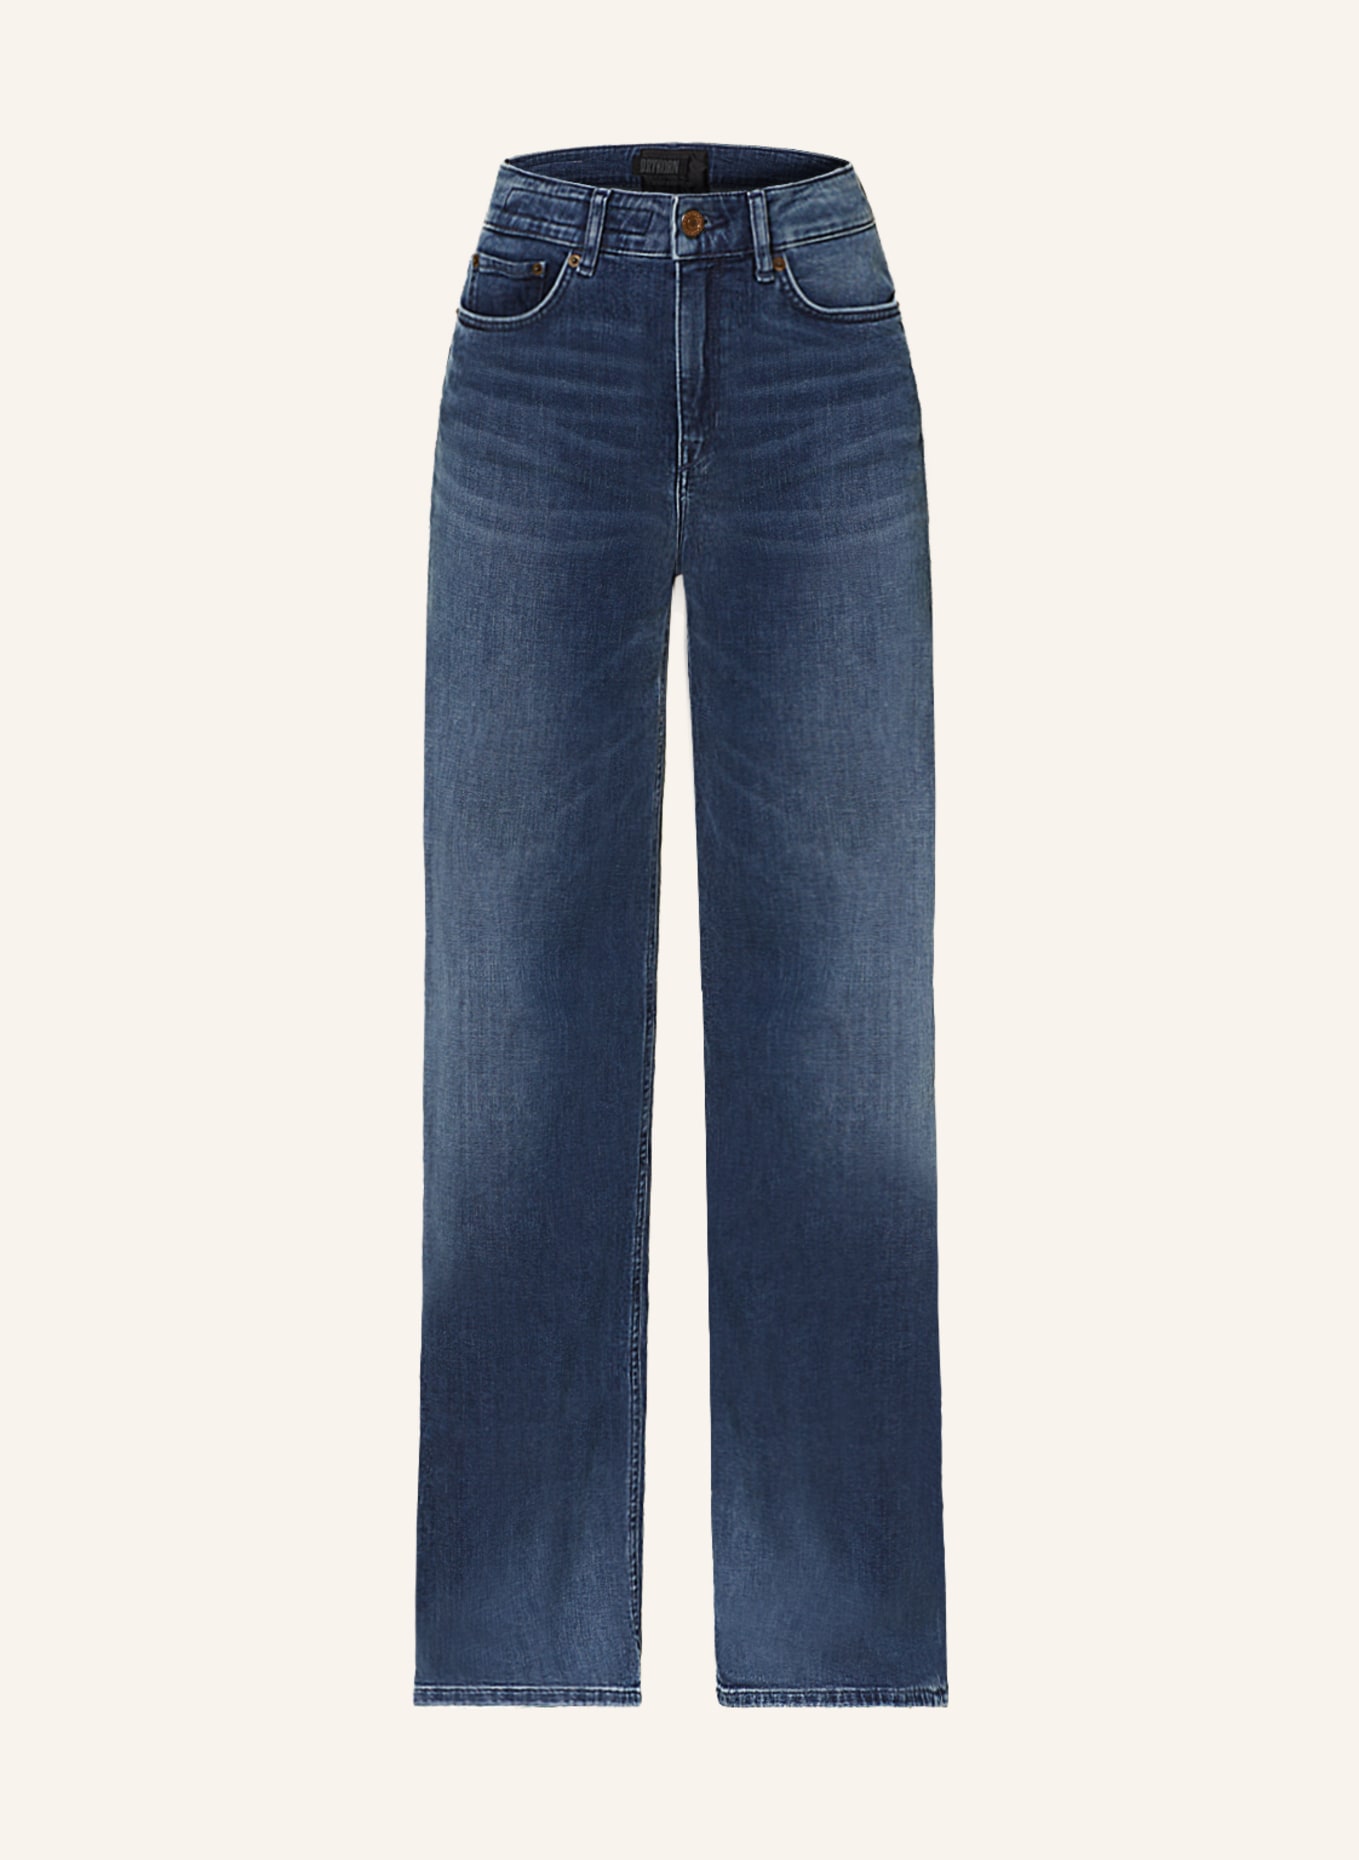 DRYKORN Jeans MEDLEY, Farbe: 3110 blau (Bild 1)